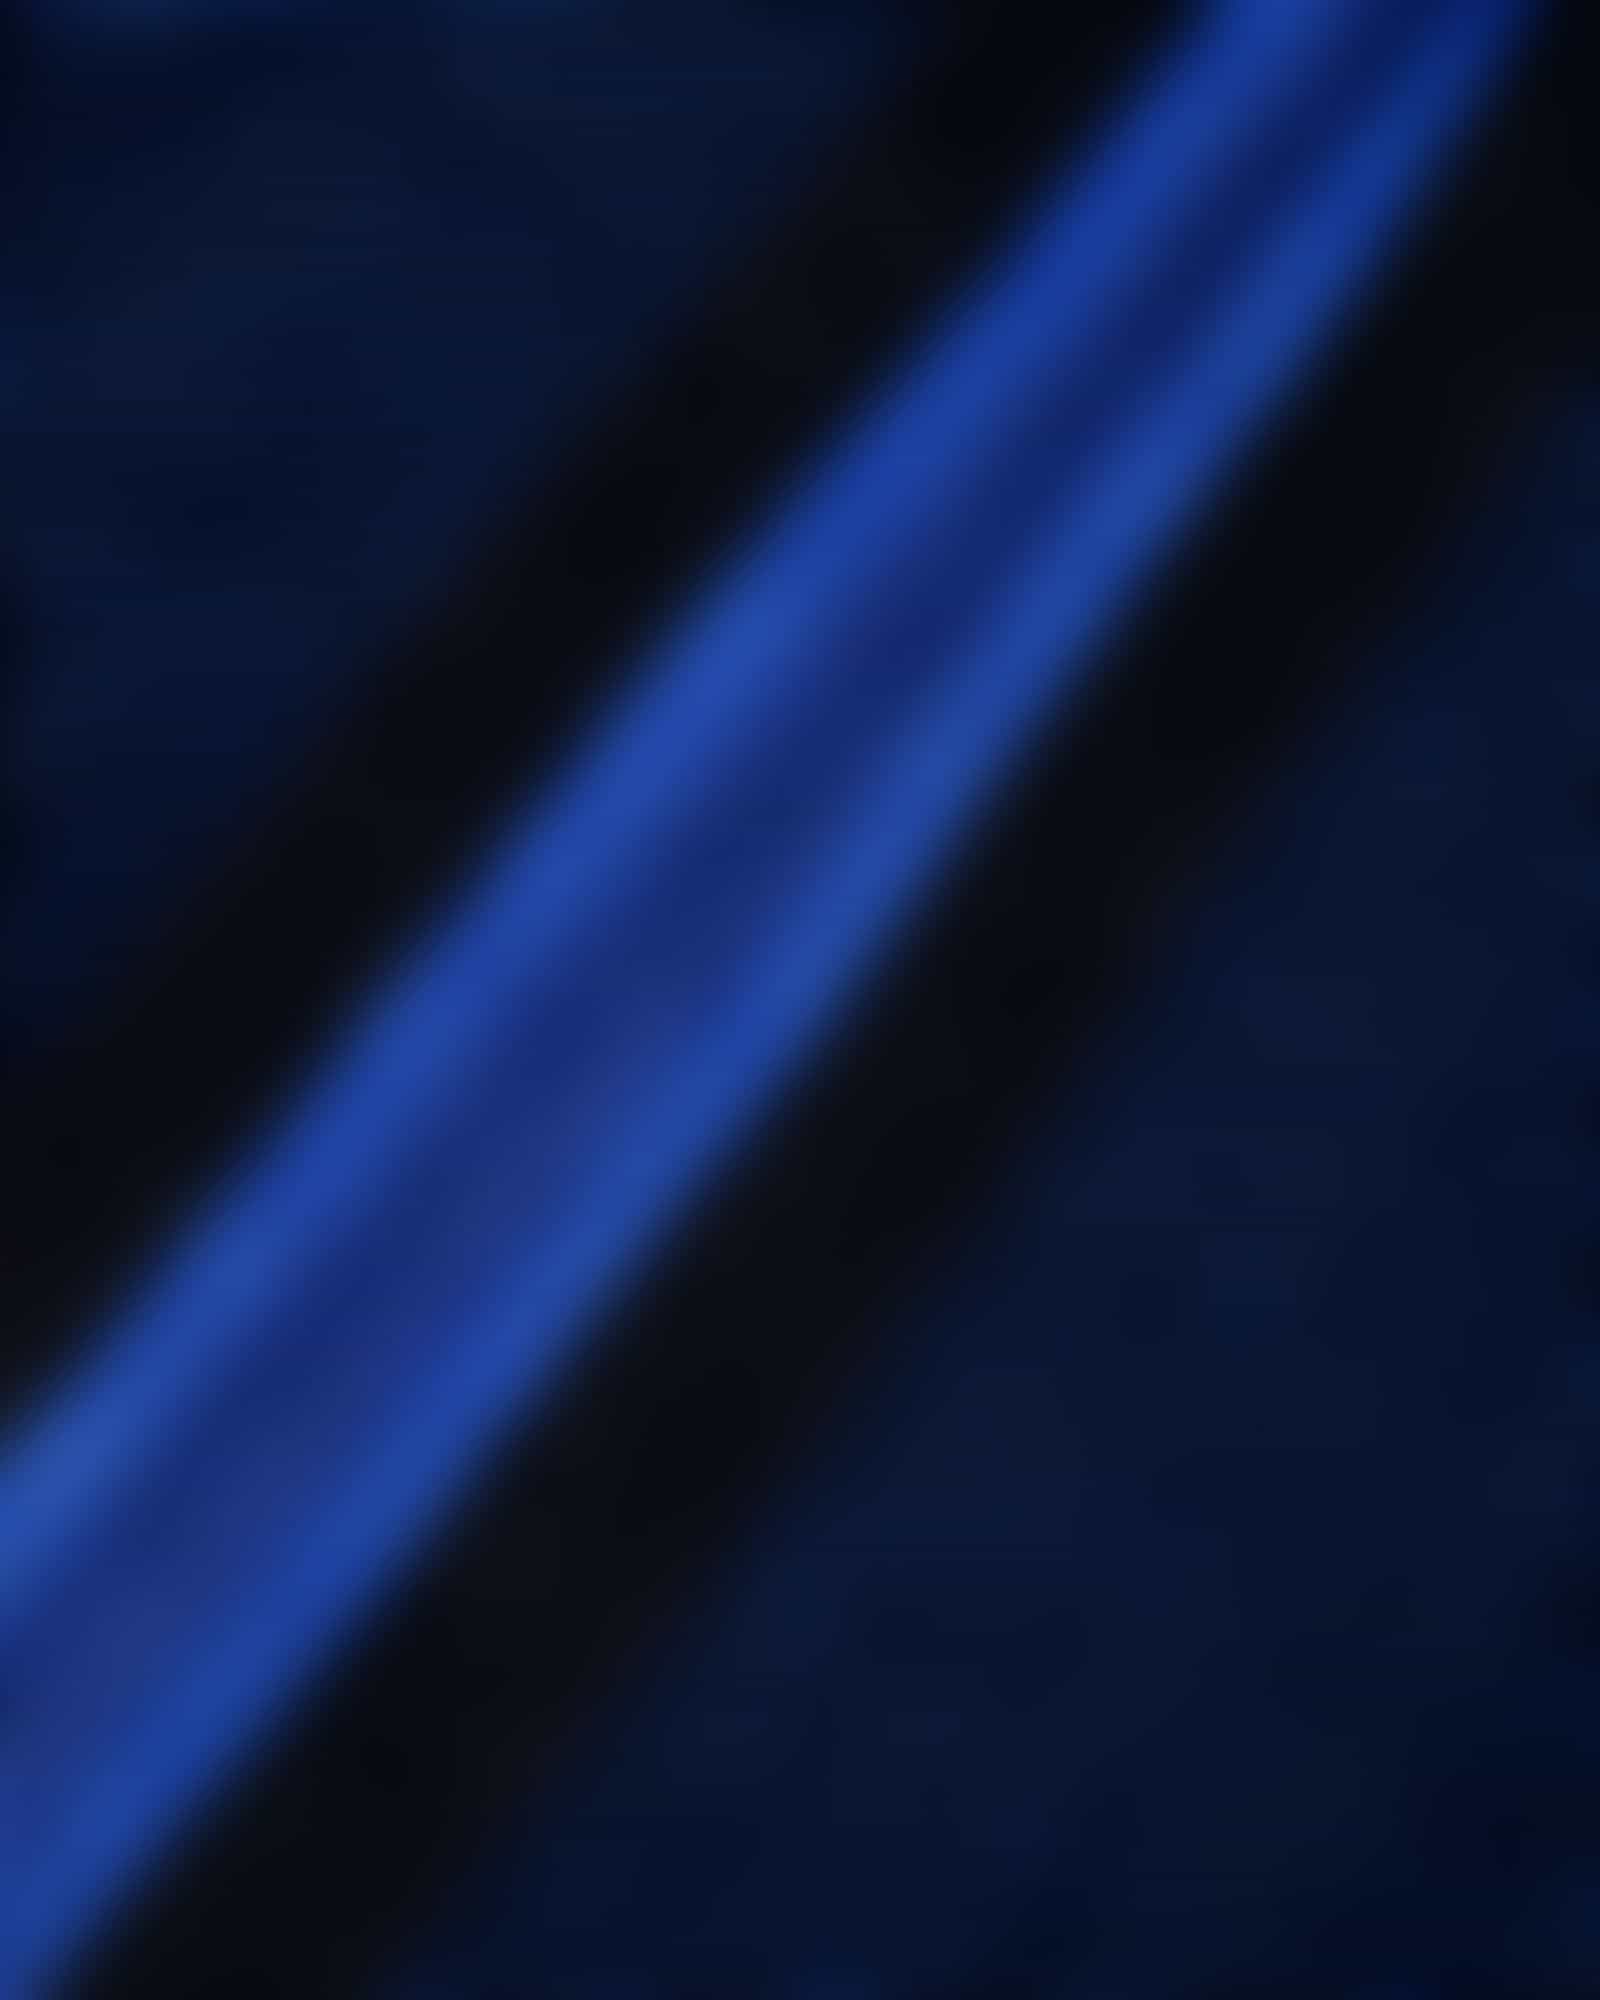 Cawö - Herren Bademantel Kimono 4839 - Farbe: blau/schwarz - 19 - L